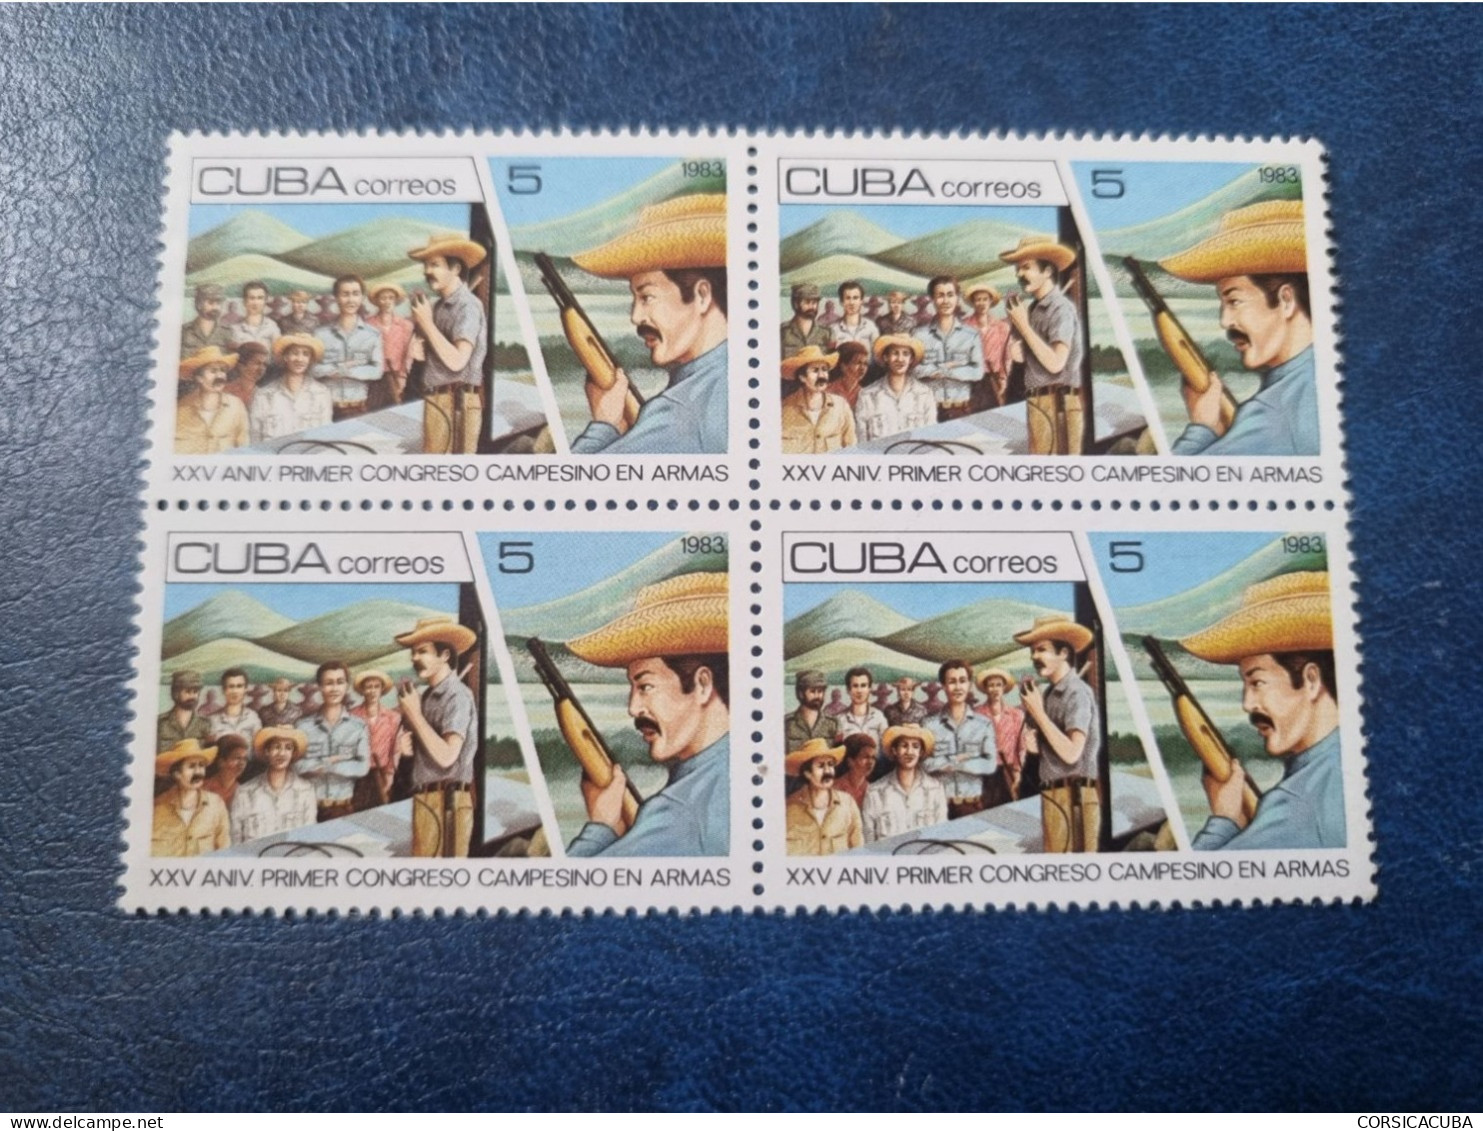 CUBA  NEUF  1983   CONGRESO  CAMPESINOS  EN  ARMAS  //  PARFAIT  ETAT  //  1er  CHOIX  // Bloc De 4 - Unused Stamps